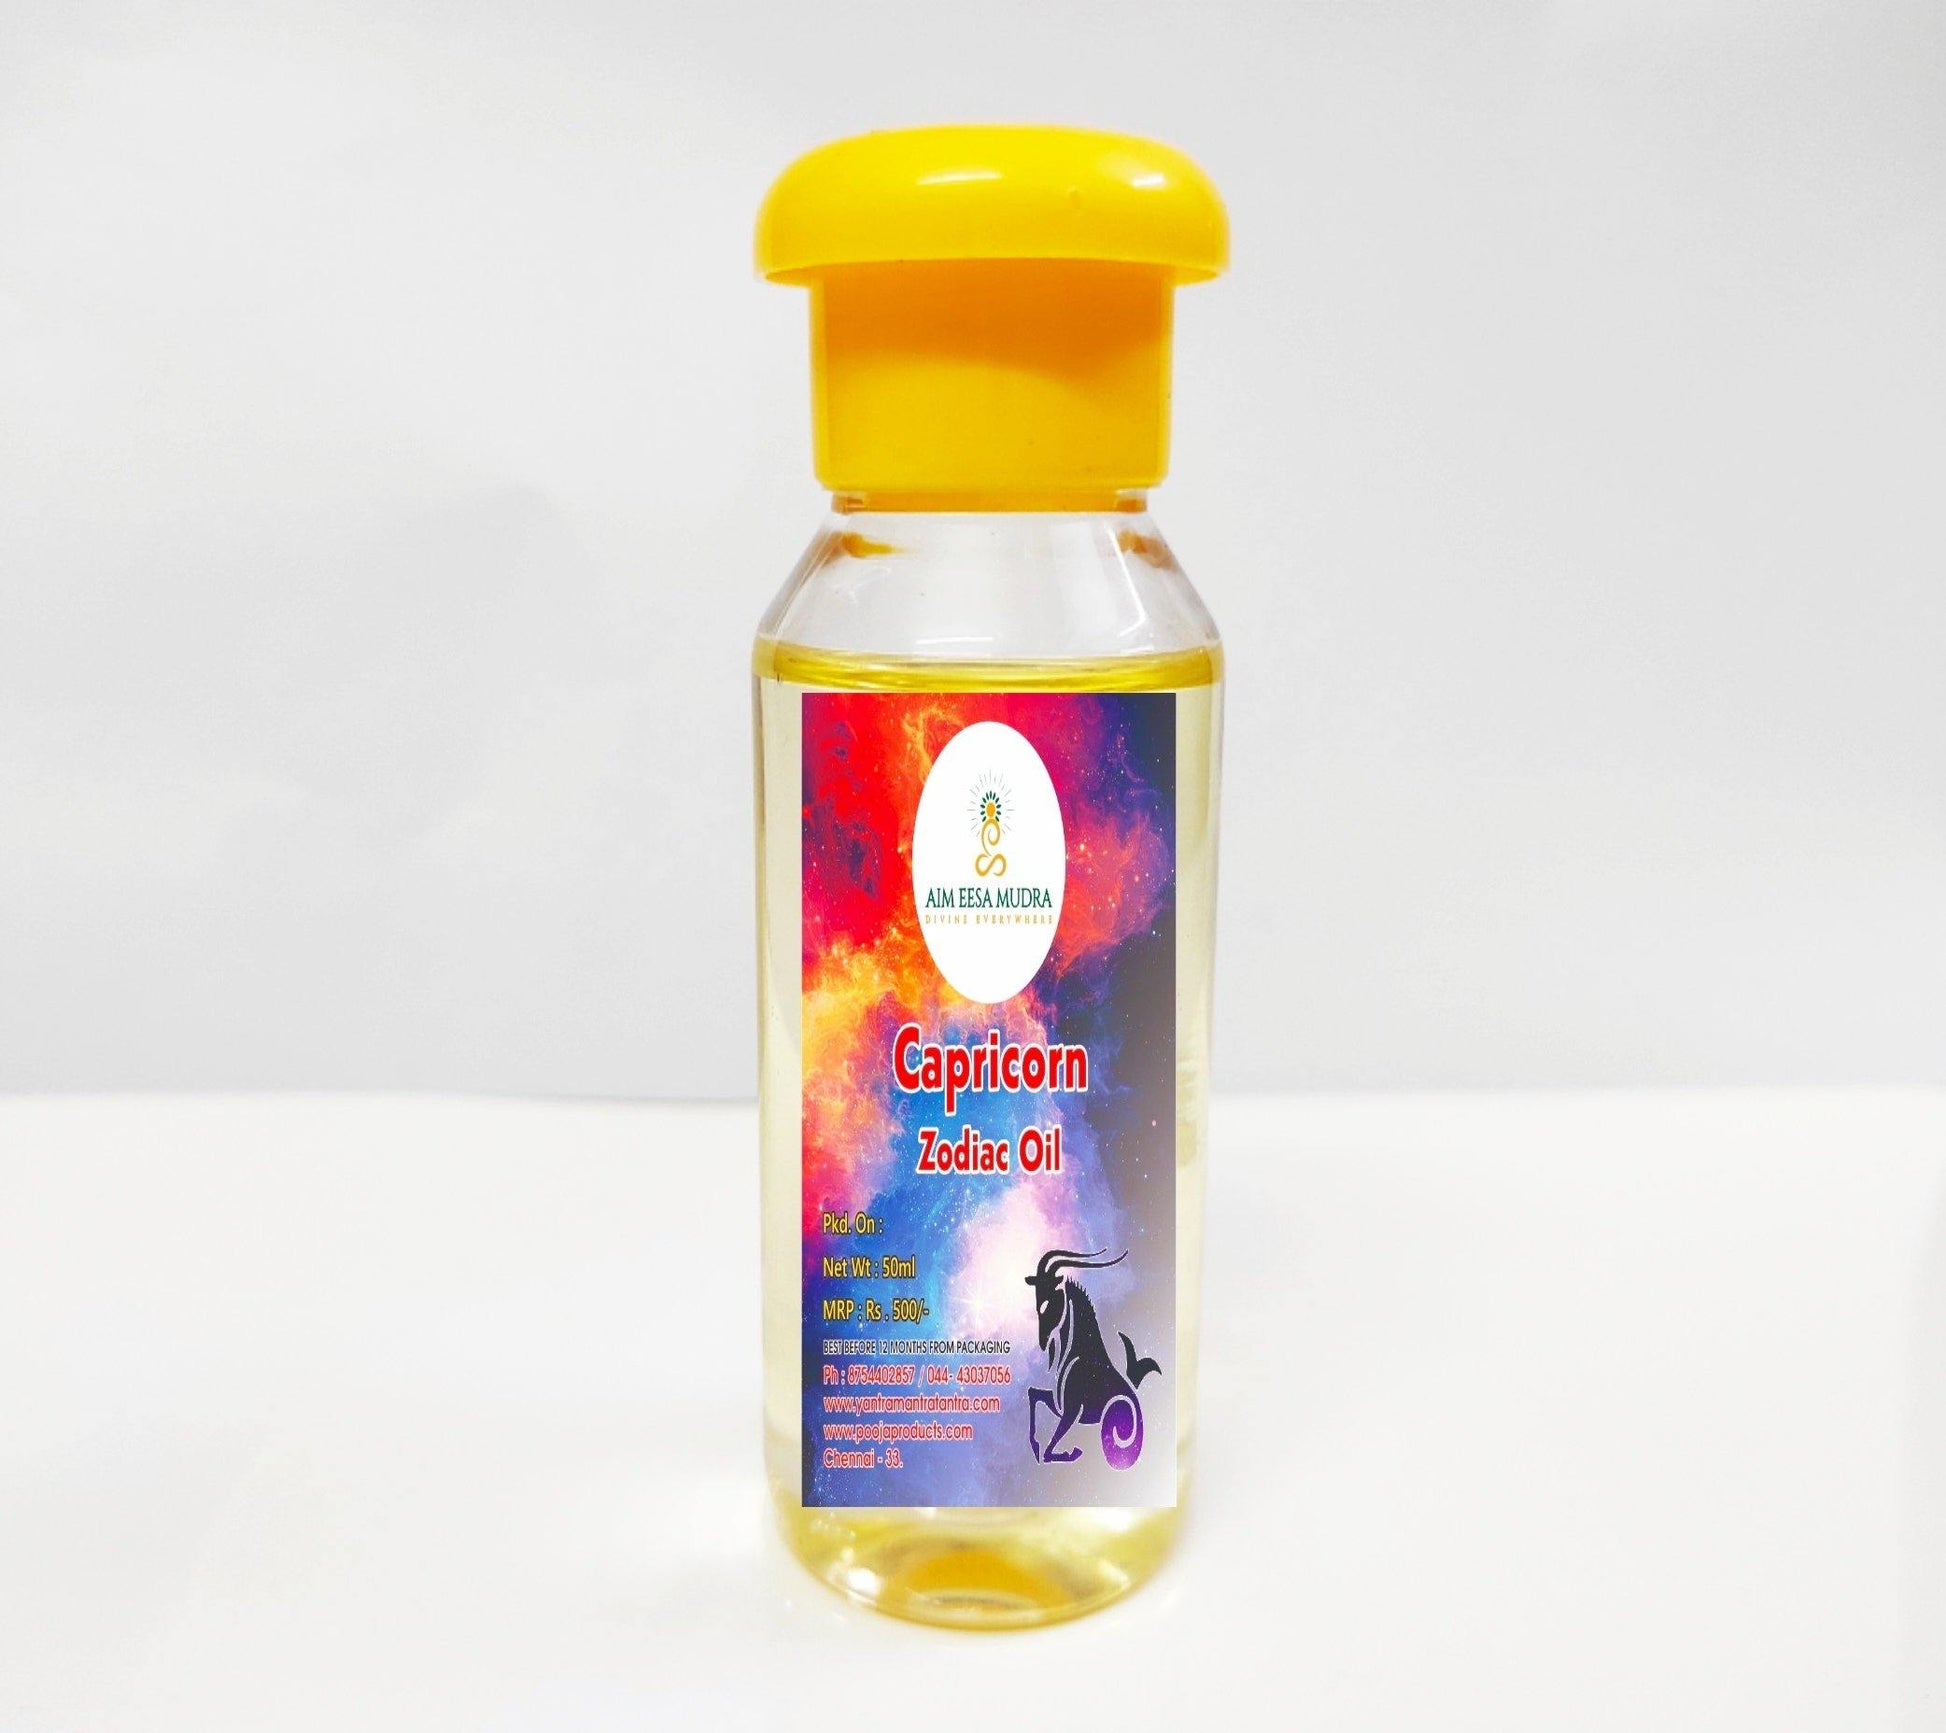 Zodiac Oil Capricorn  (50ml)  (𝗧𝗛𝗜𝗦 𝗣𝗥𝗢𝗗𝗨𝗖𝗧 𝗔𝗩𝗔𝗜𝗟𝗕𝗟𝗘 𝗢𝗡𝗟𝗬 𝗜𝗡𝗦𝗜𝗗𝗘 𝗜𝗡𝗗𝗜𝗔) - PoojaProducts.com